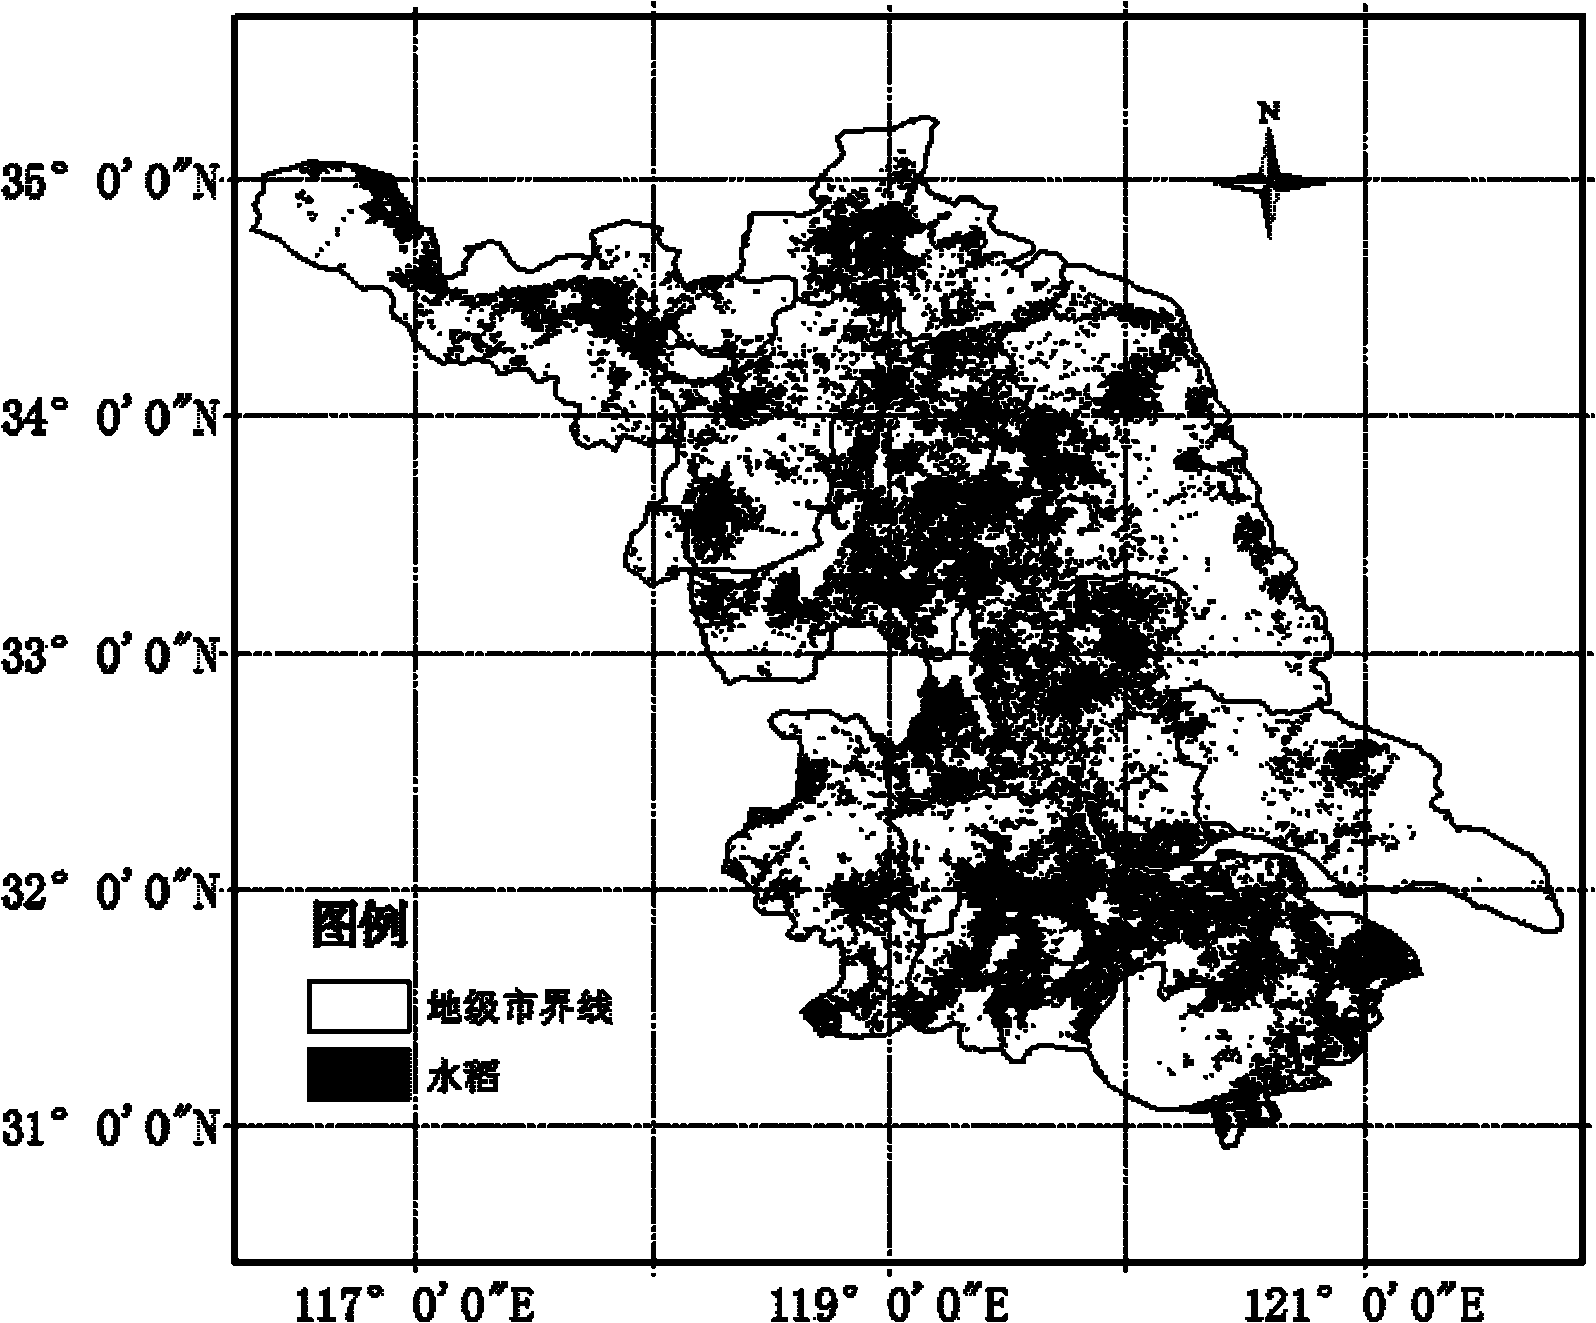 Rice yield remote sensing estimation method based on MODIS data